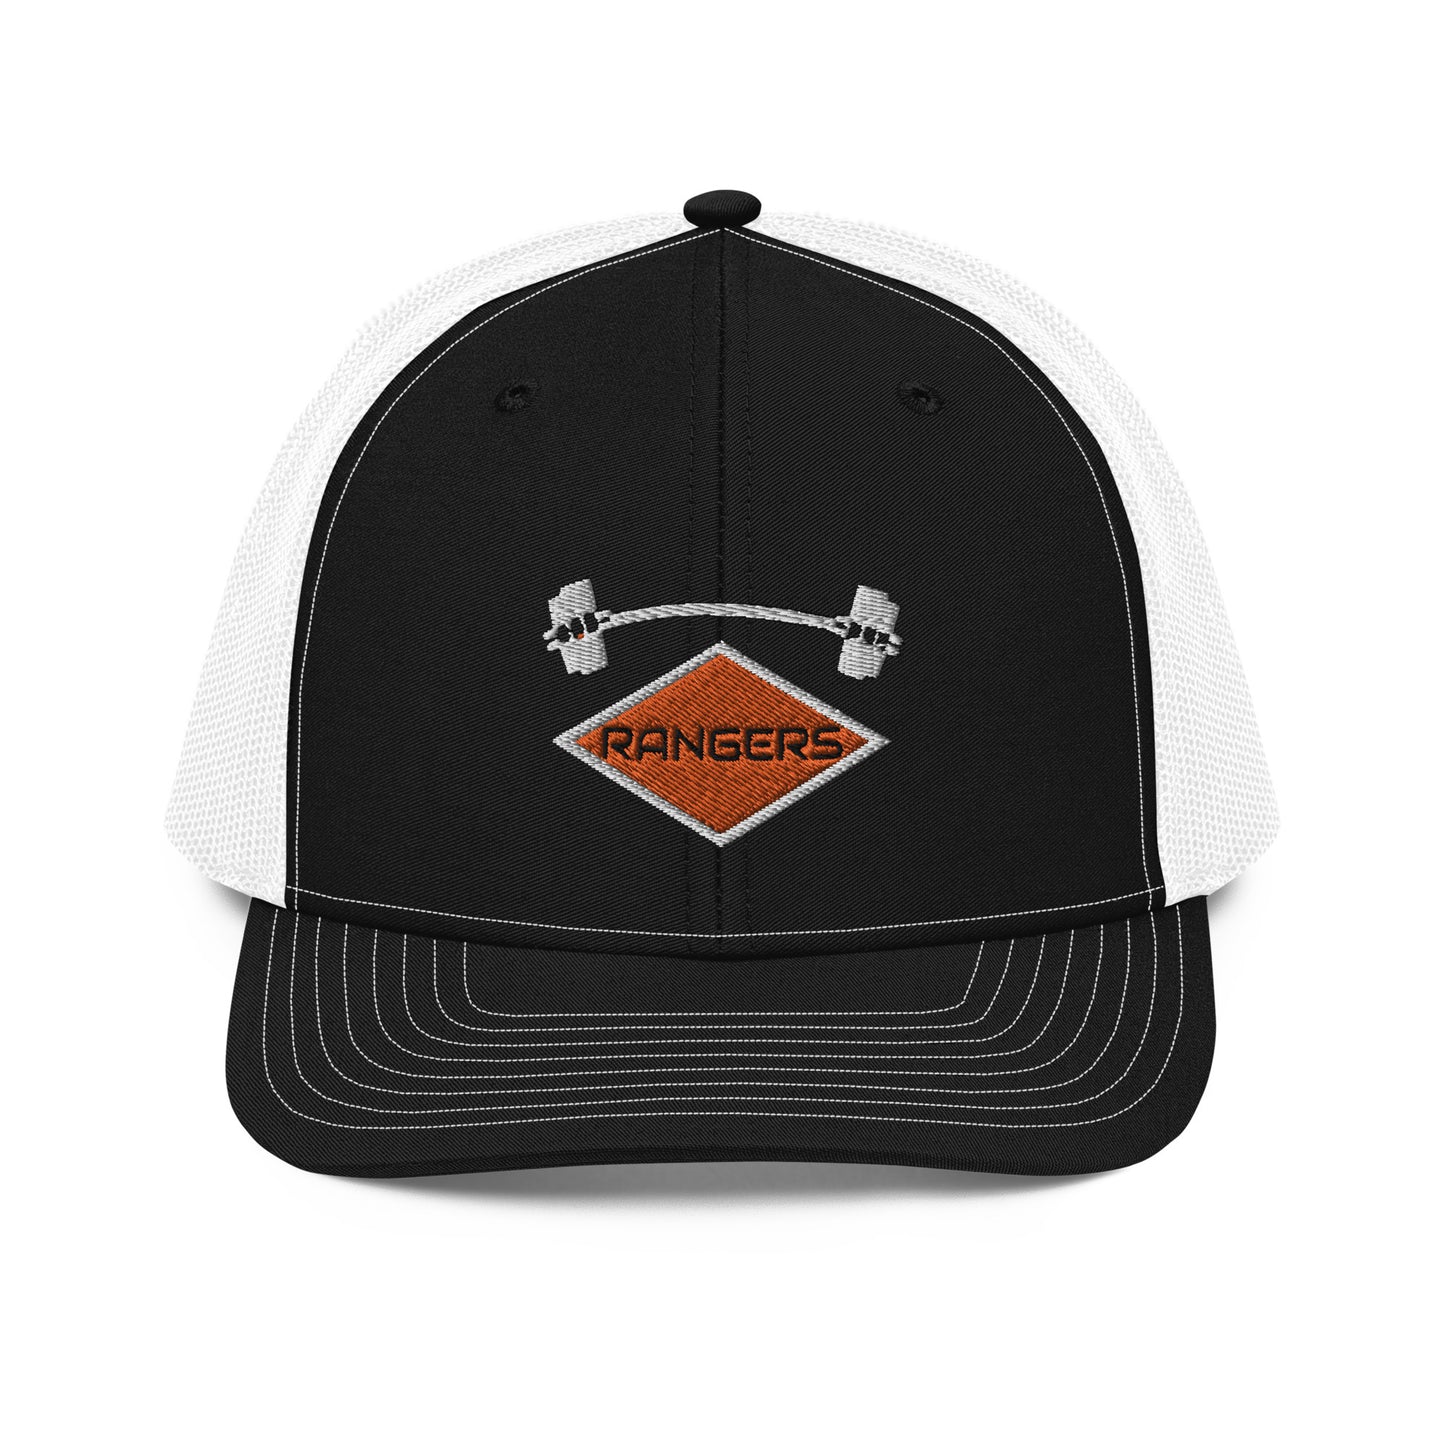 Rangers Diamond Barbell Trucker Hat